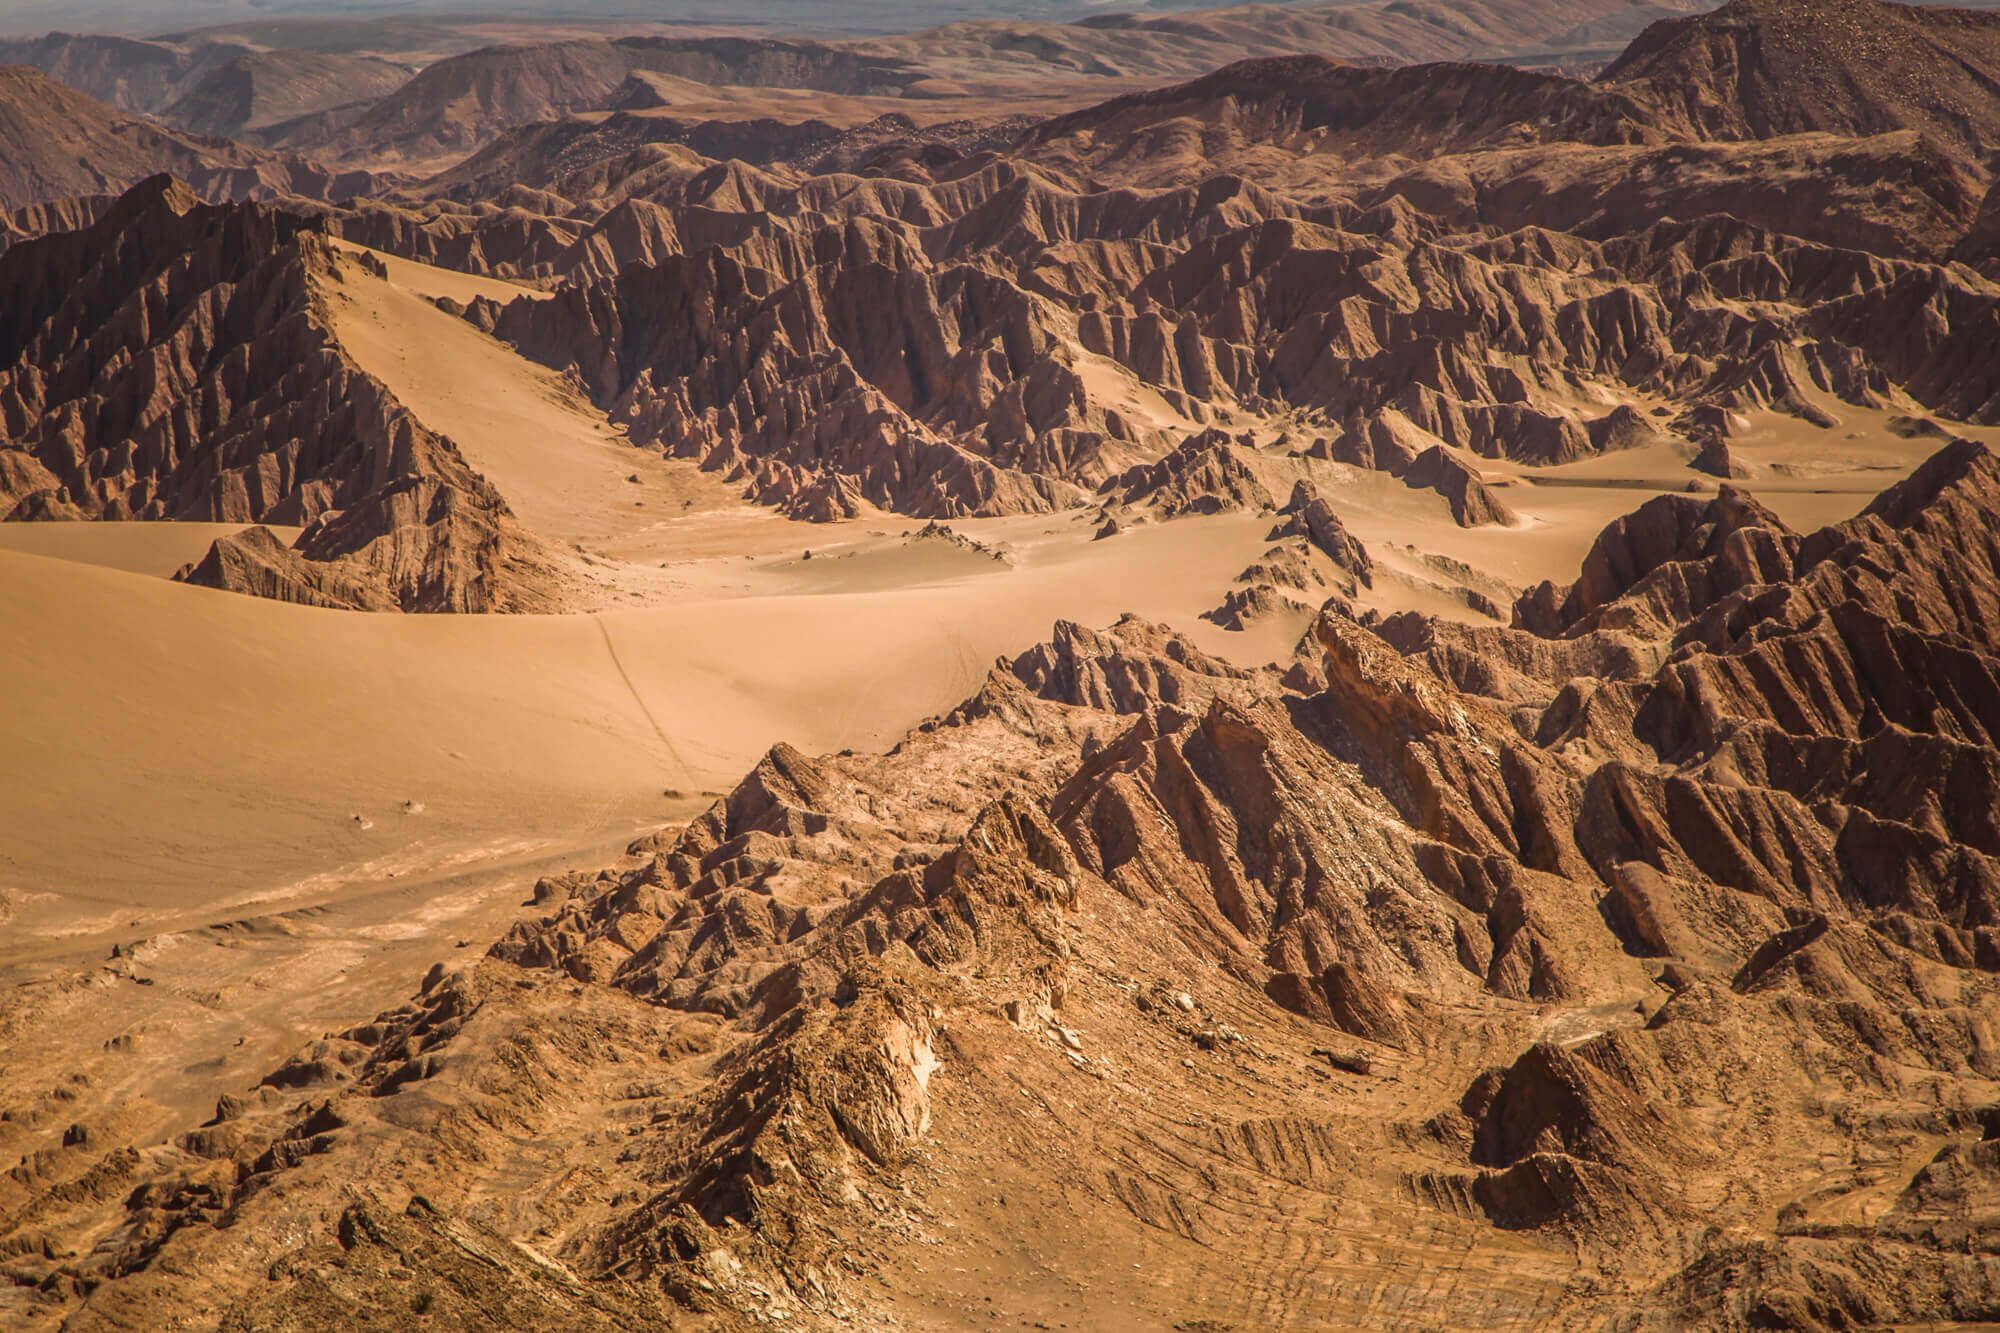 Atacama Desert driest place on earth